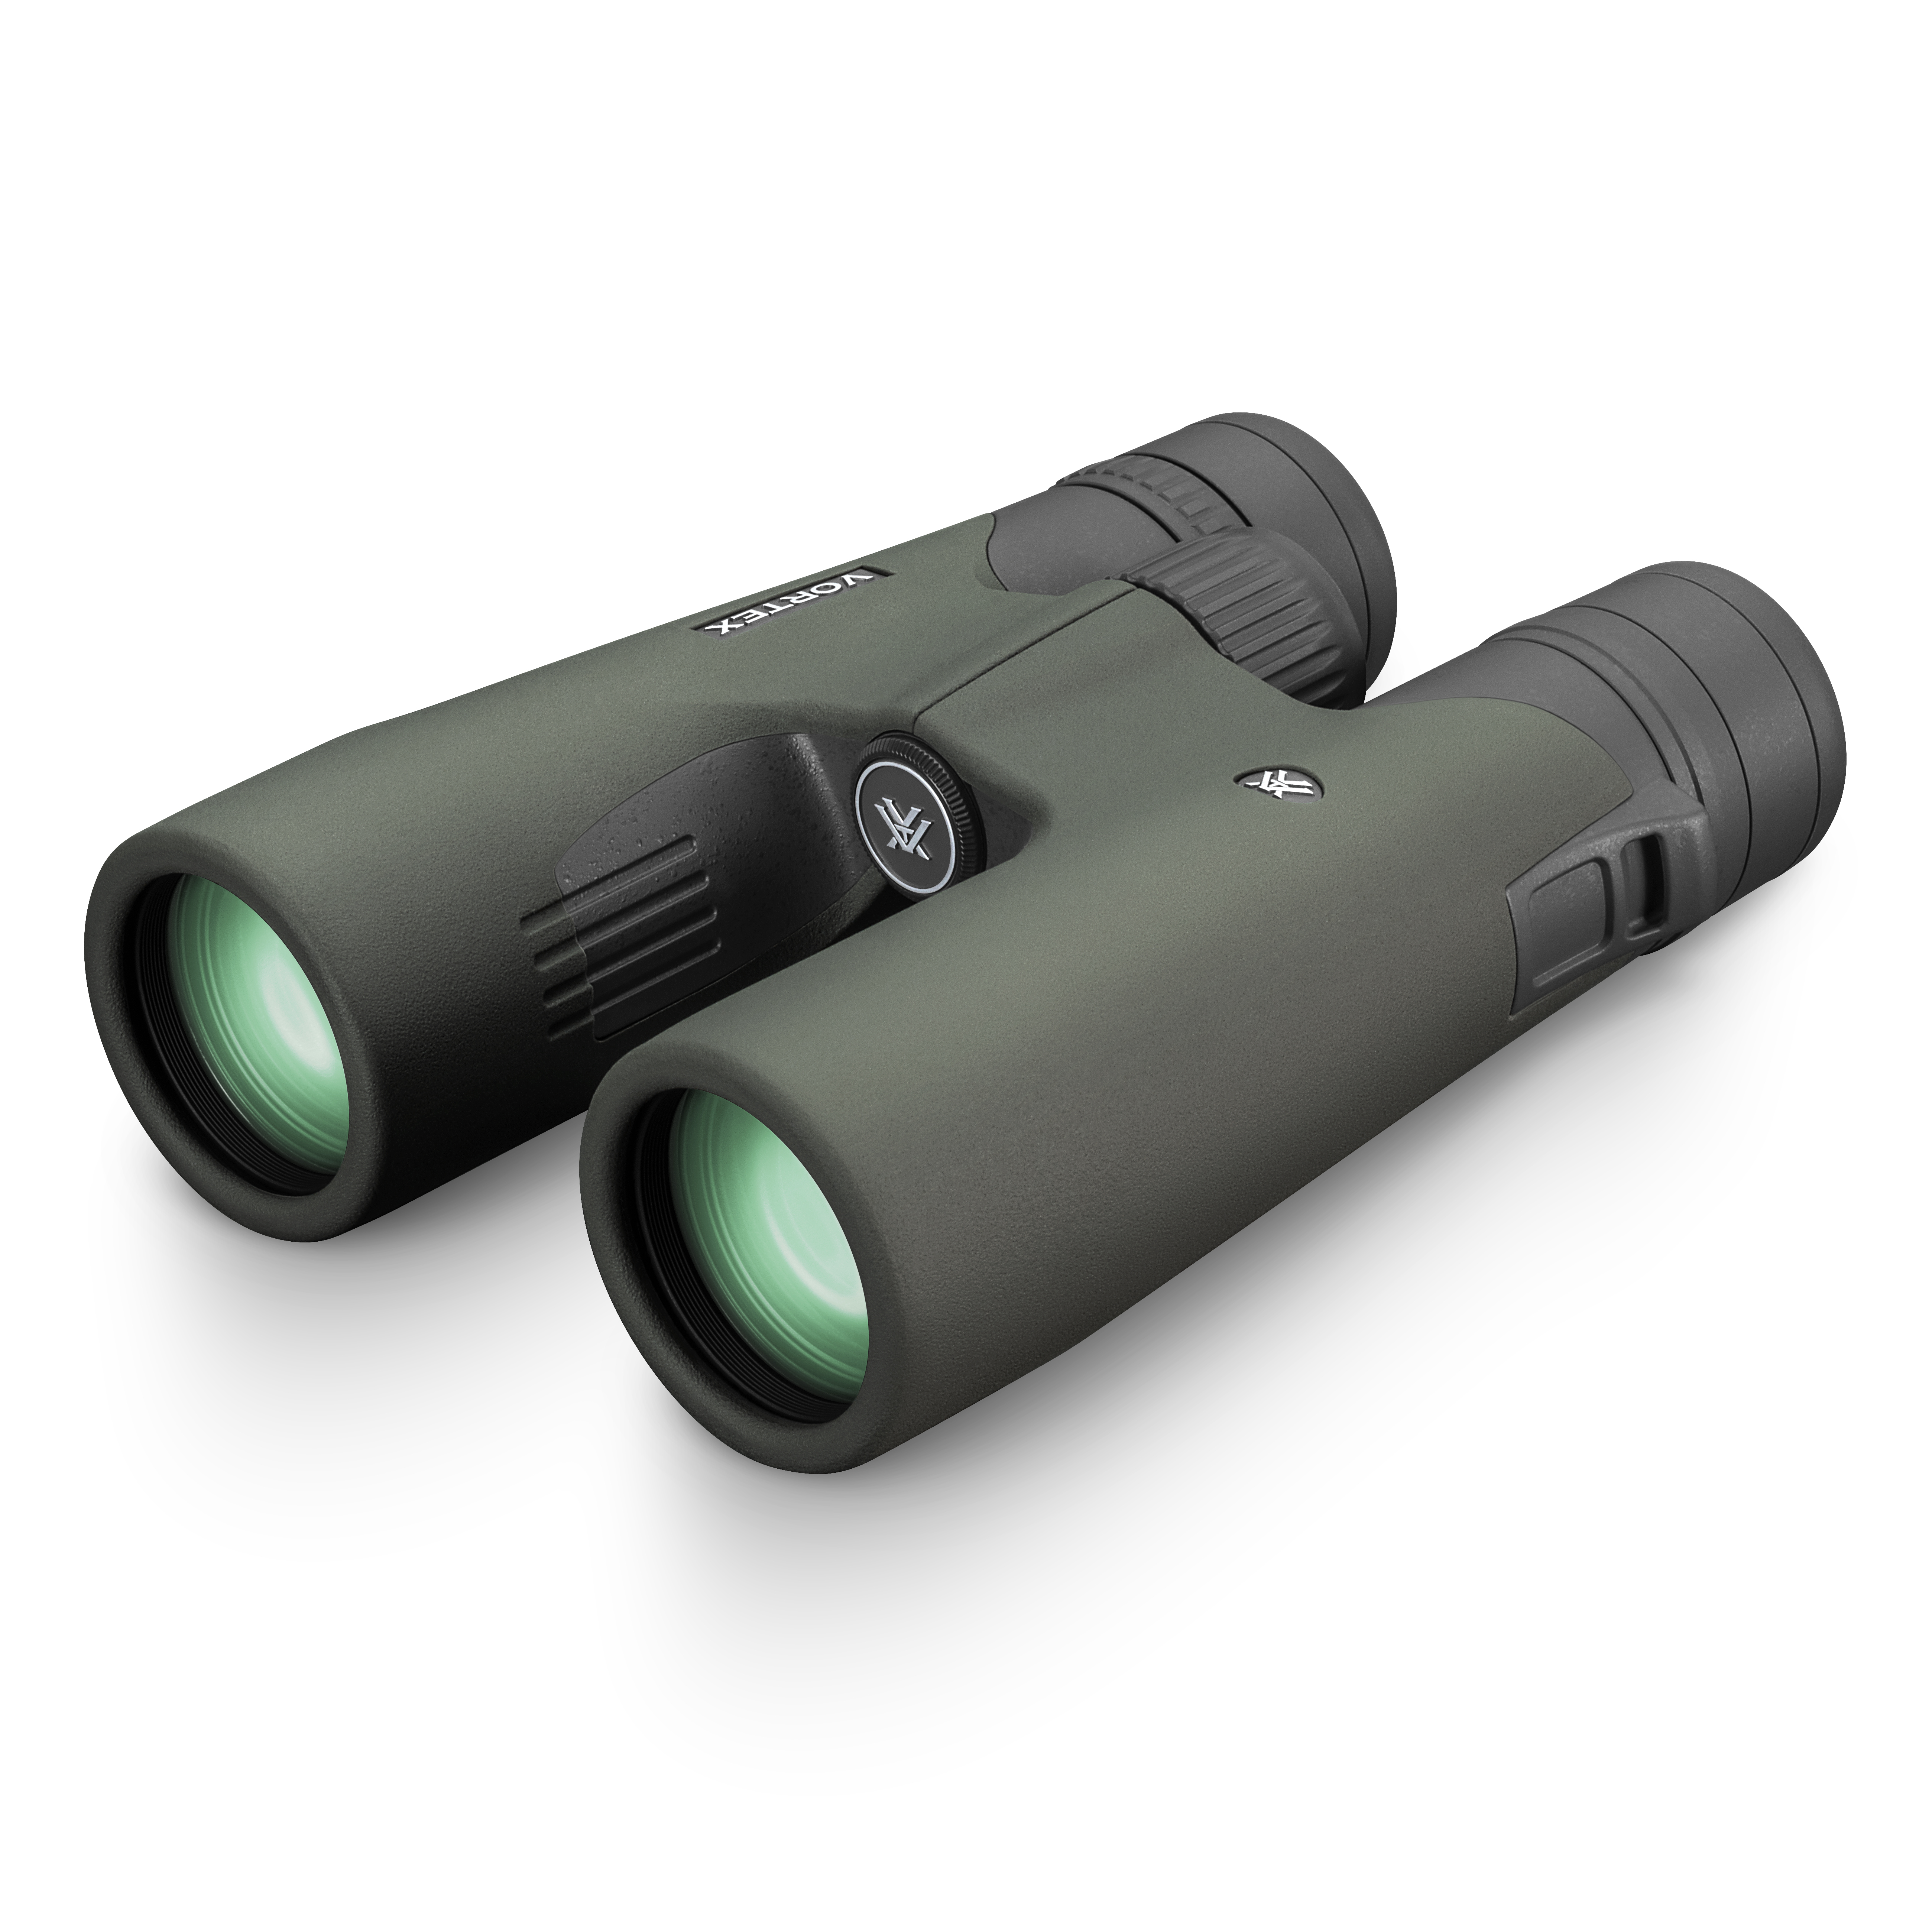 The Best Binoculars & Binocular Reviews Website